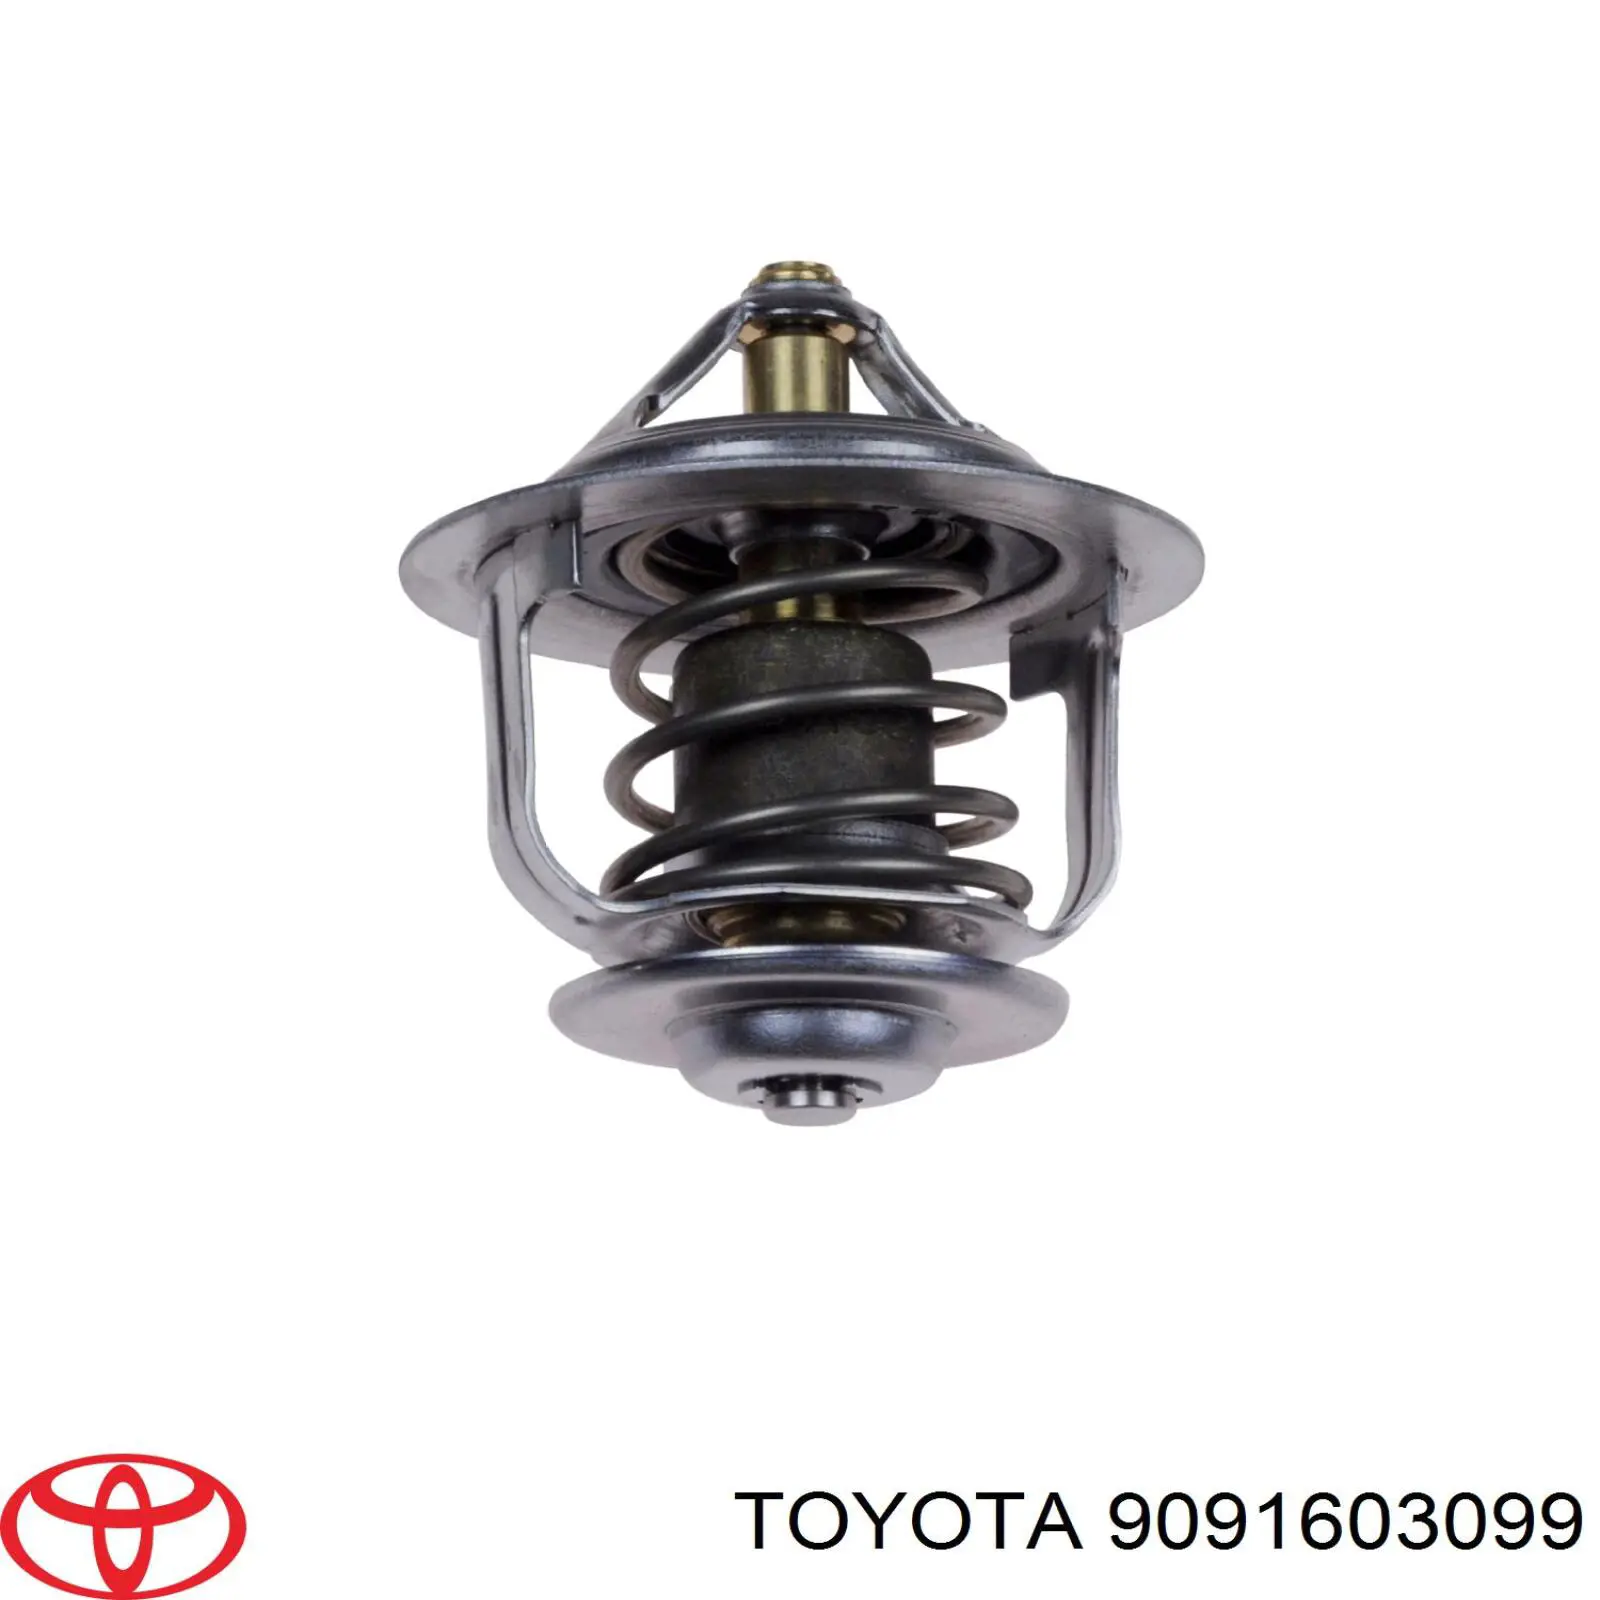 9091603099 Toyota термостат